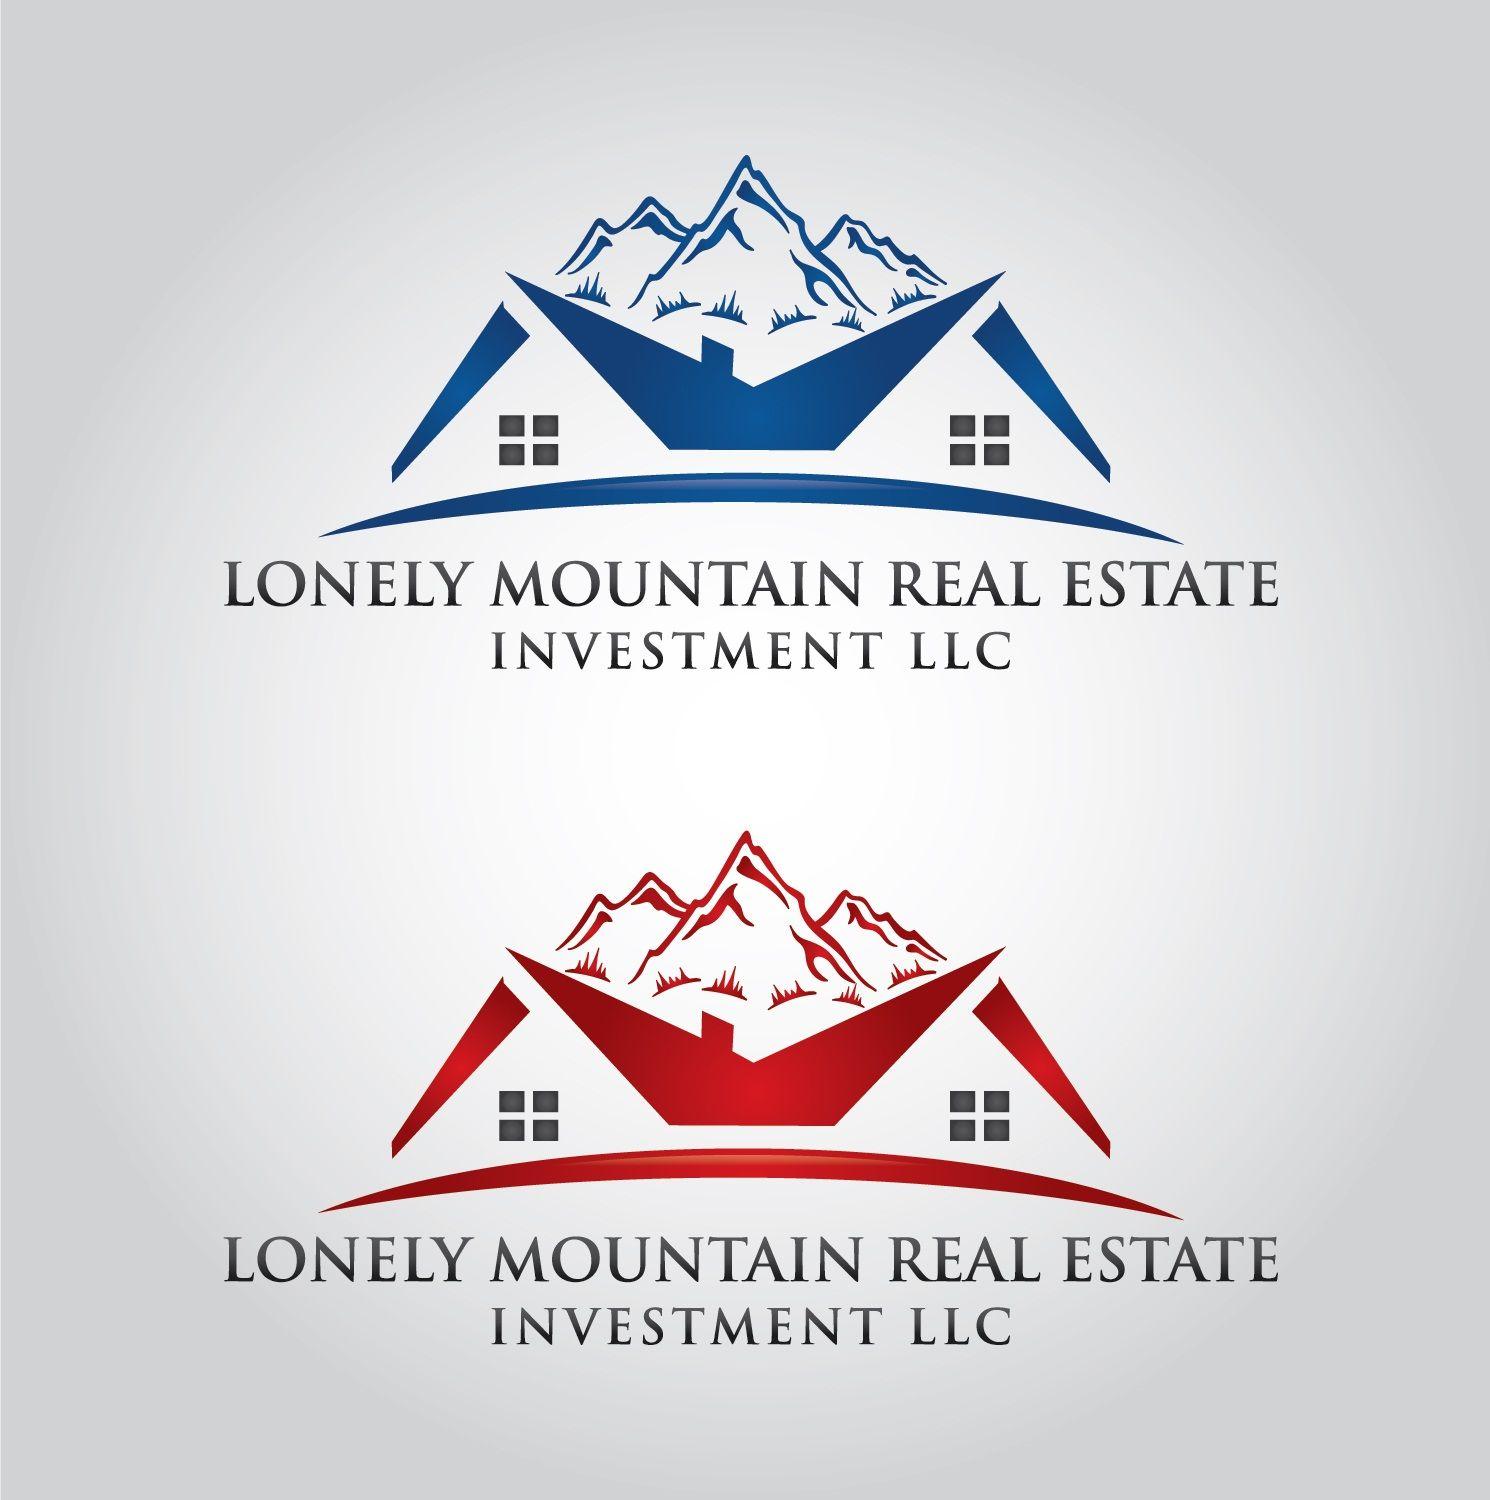 Real Estate Investment Logo - Elegant, Playful, Real Estate Logo Design for Lonely Mountain Real